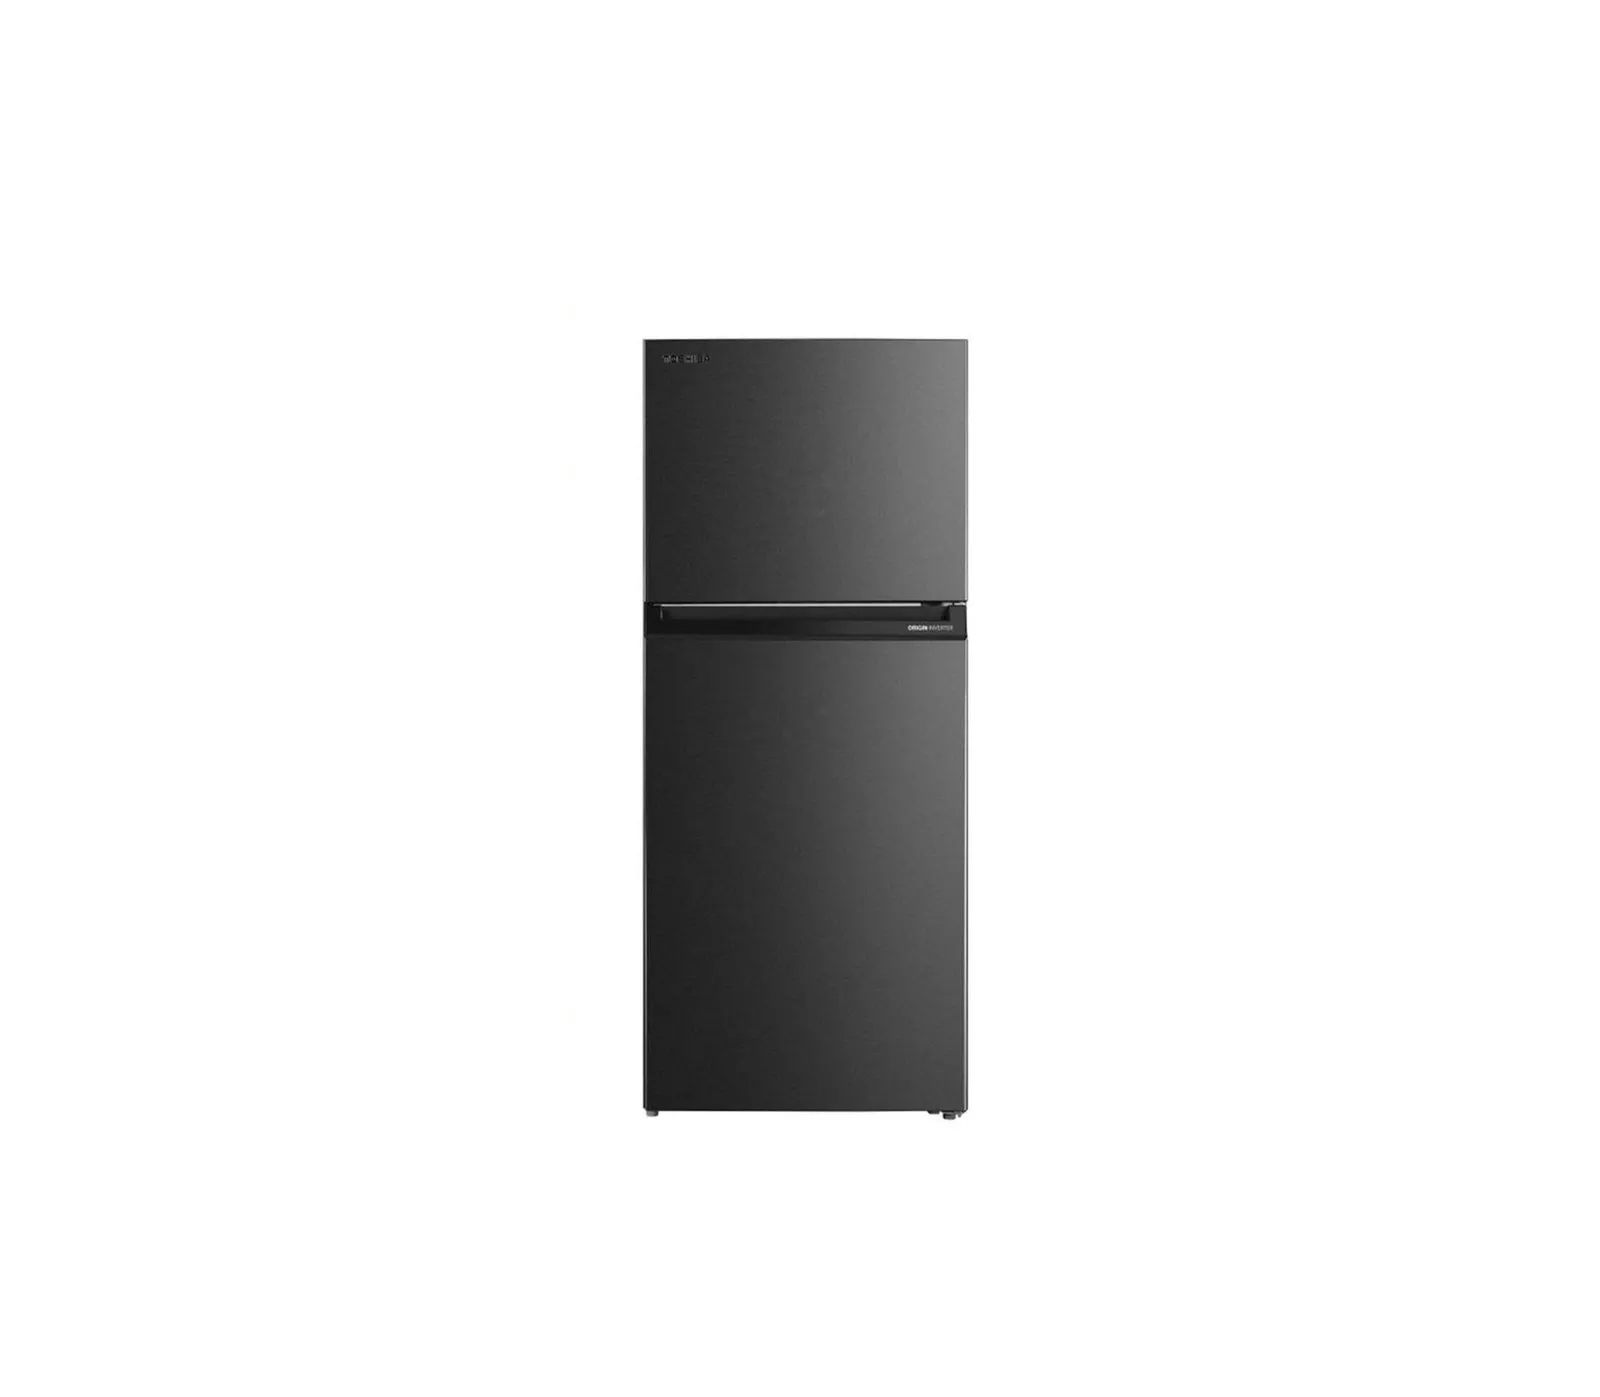 Toshiba 411 Liter Top Mount Refrigerator Inverter Compressor Color Grey Model – GRRT559WEPME – 1 Year Full 10 Years Compressor Warranty.